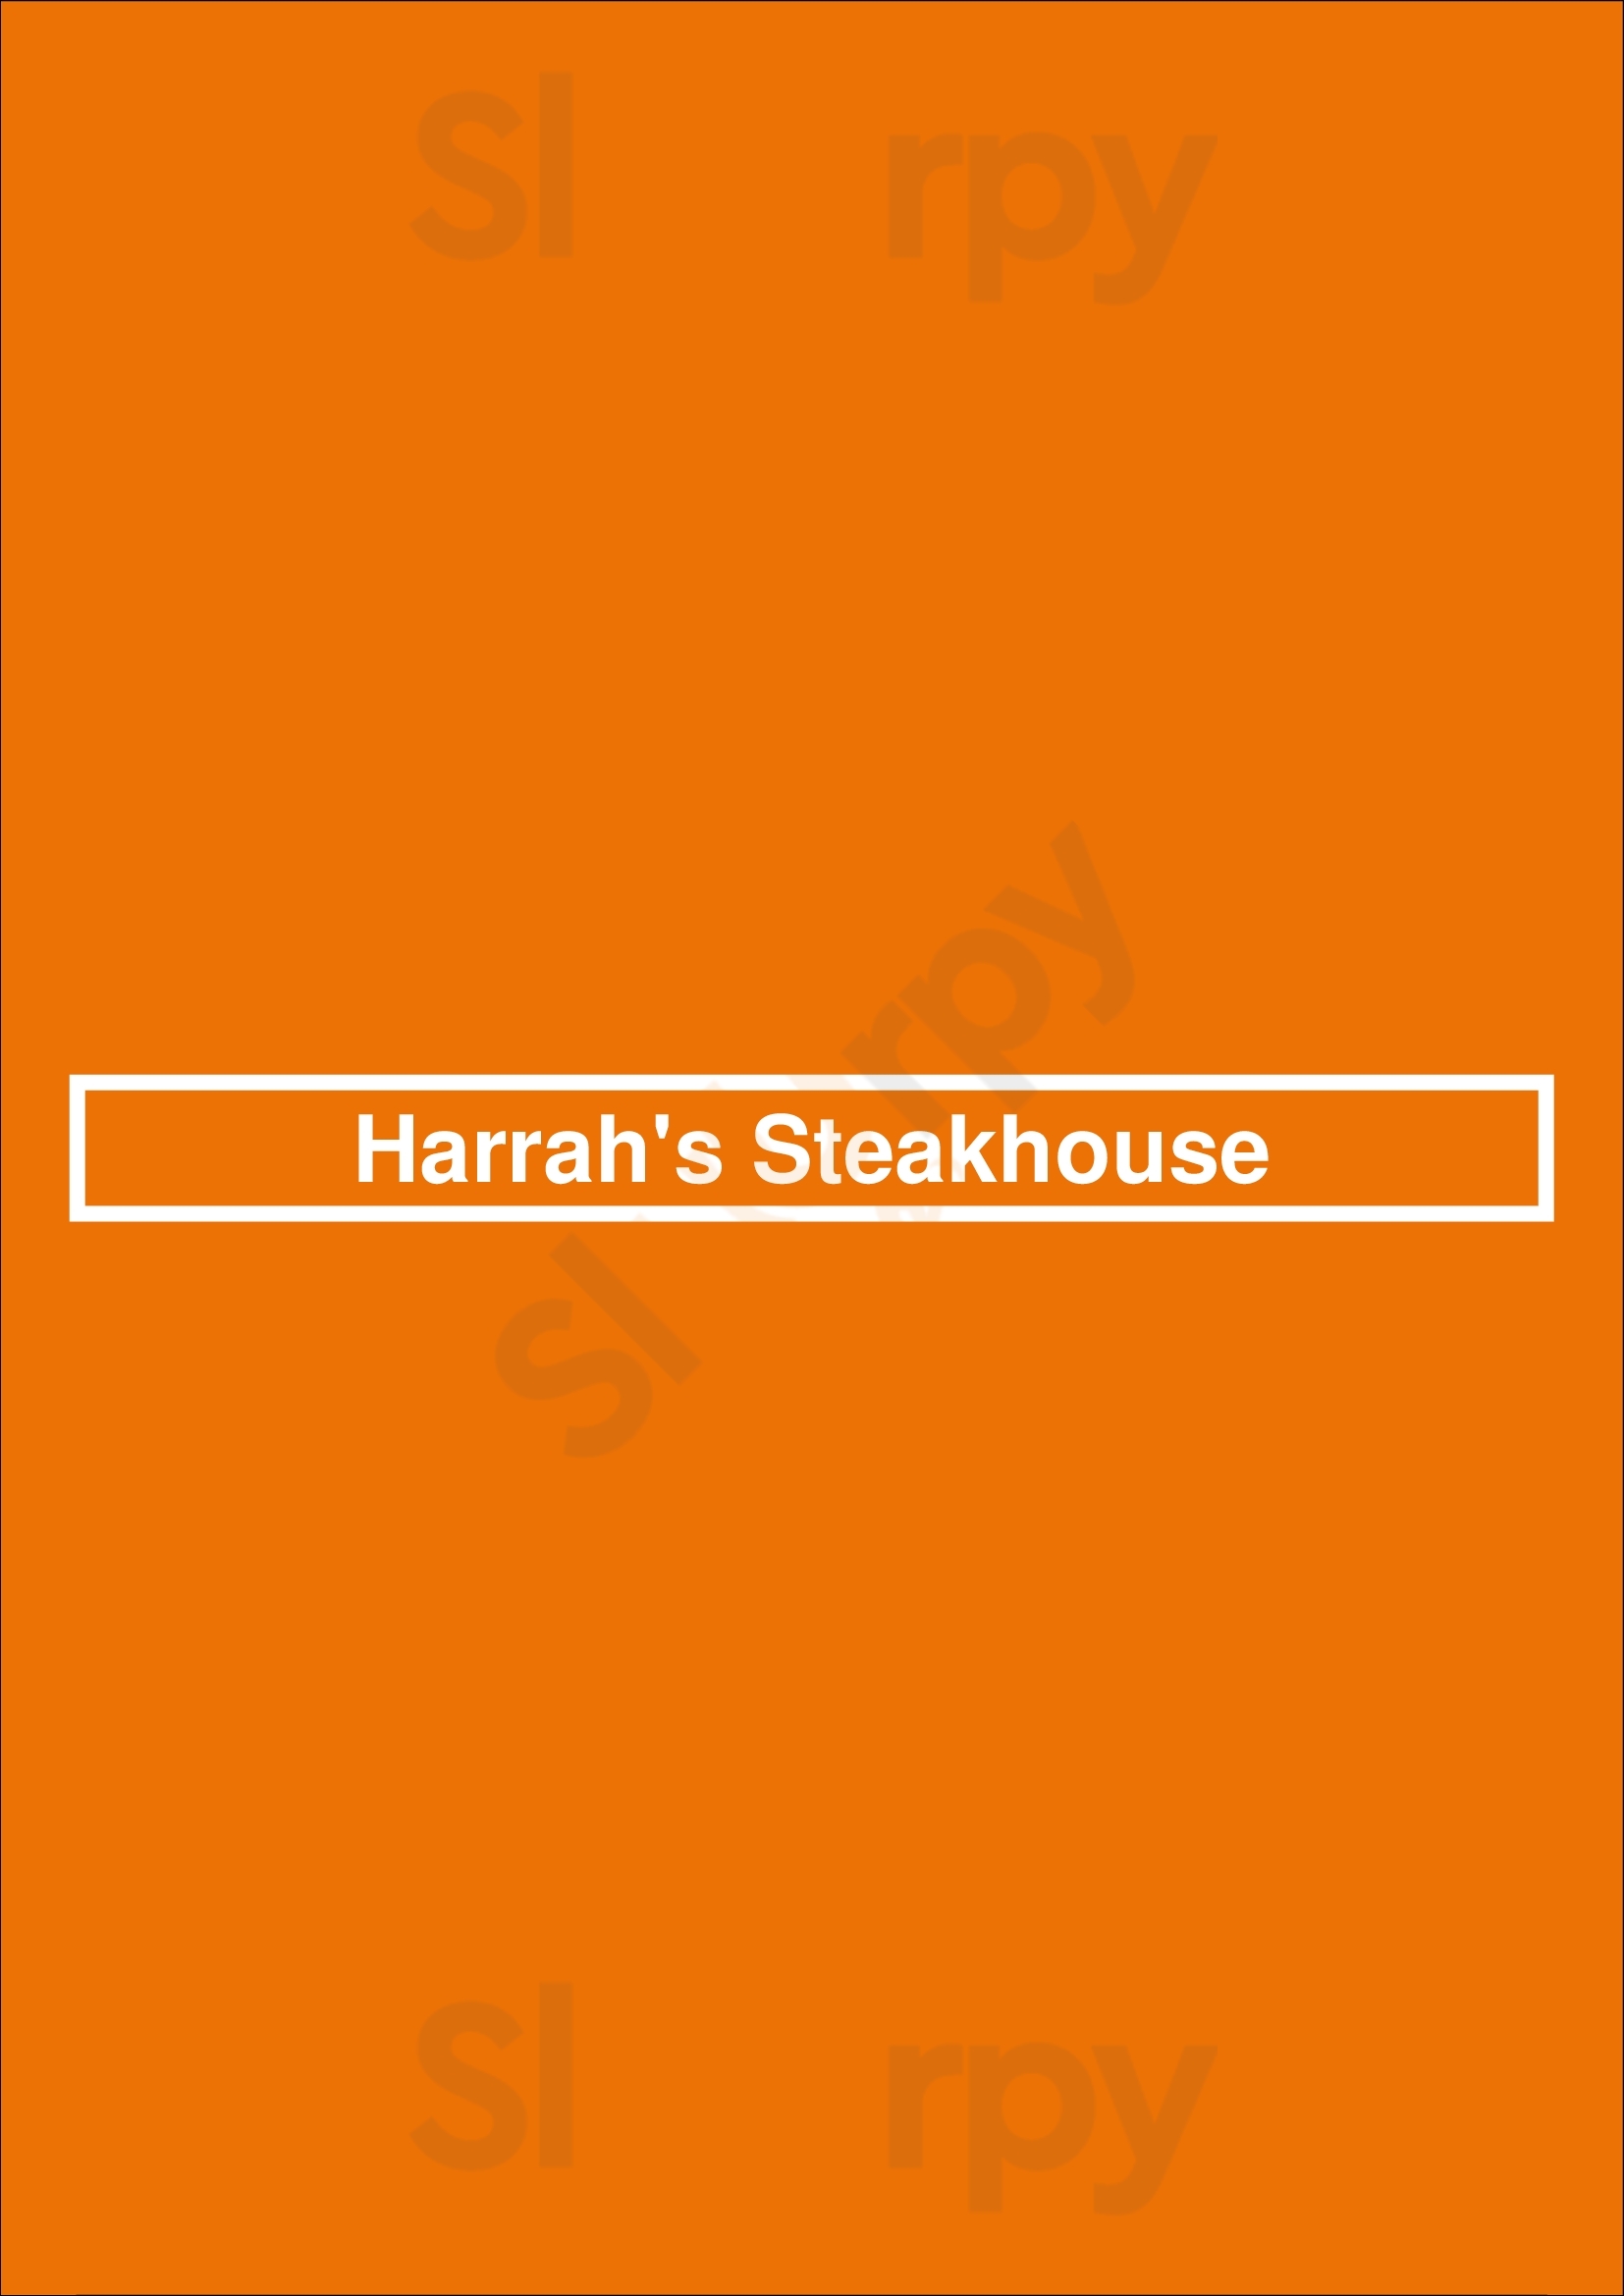 Harrah's Steakhouse Reno Menu - 1